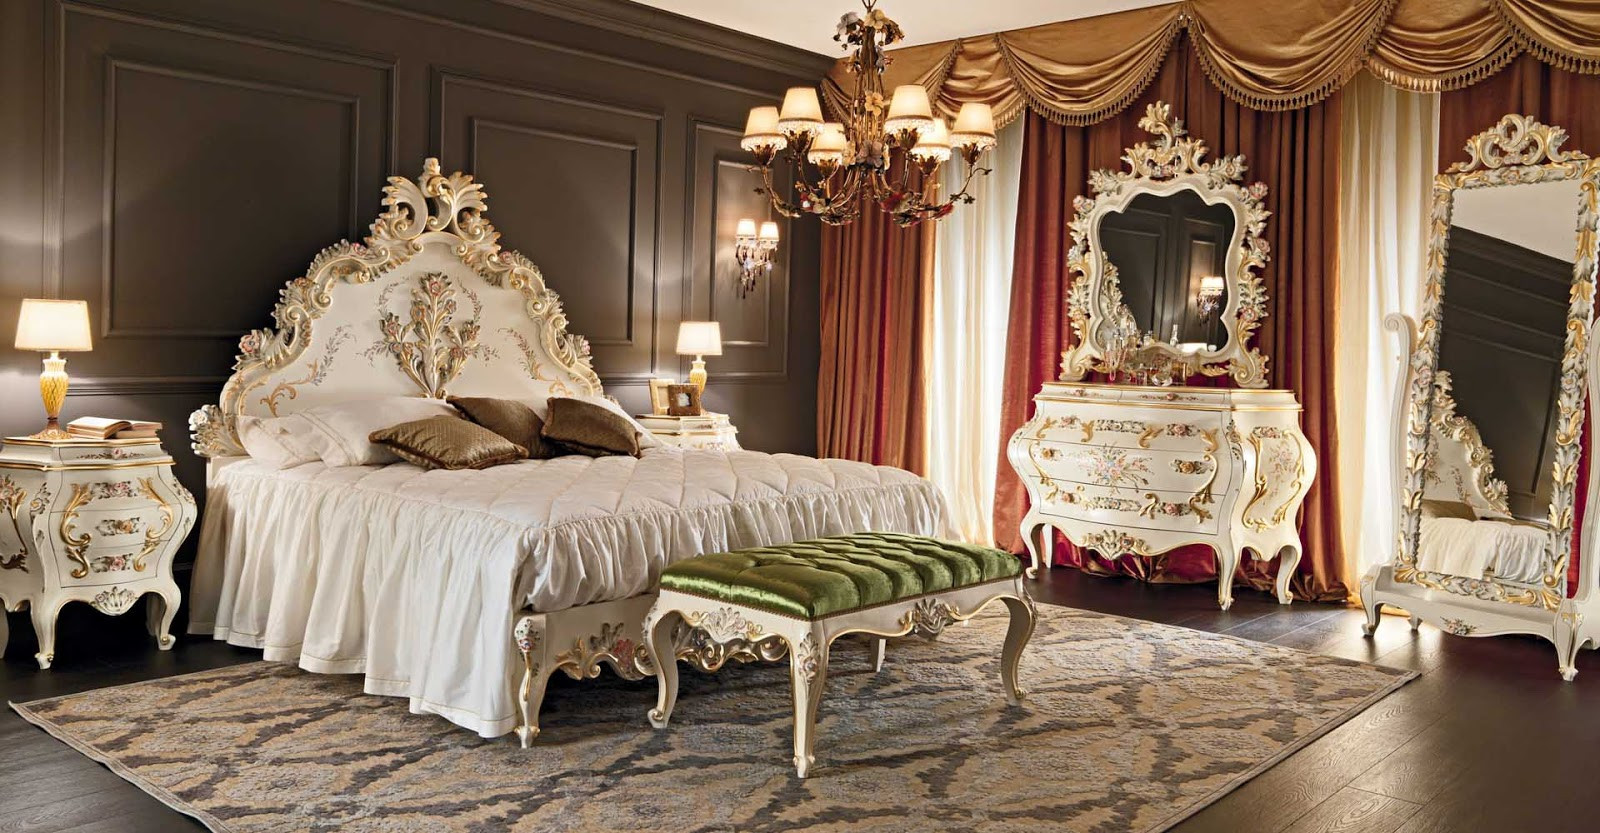 Luxury Master Bedroom Furniture
 23 Amazing Luxury Bedroom Furniture Ideas Home Design